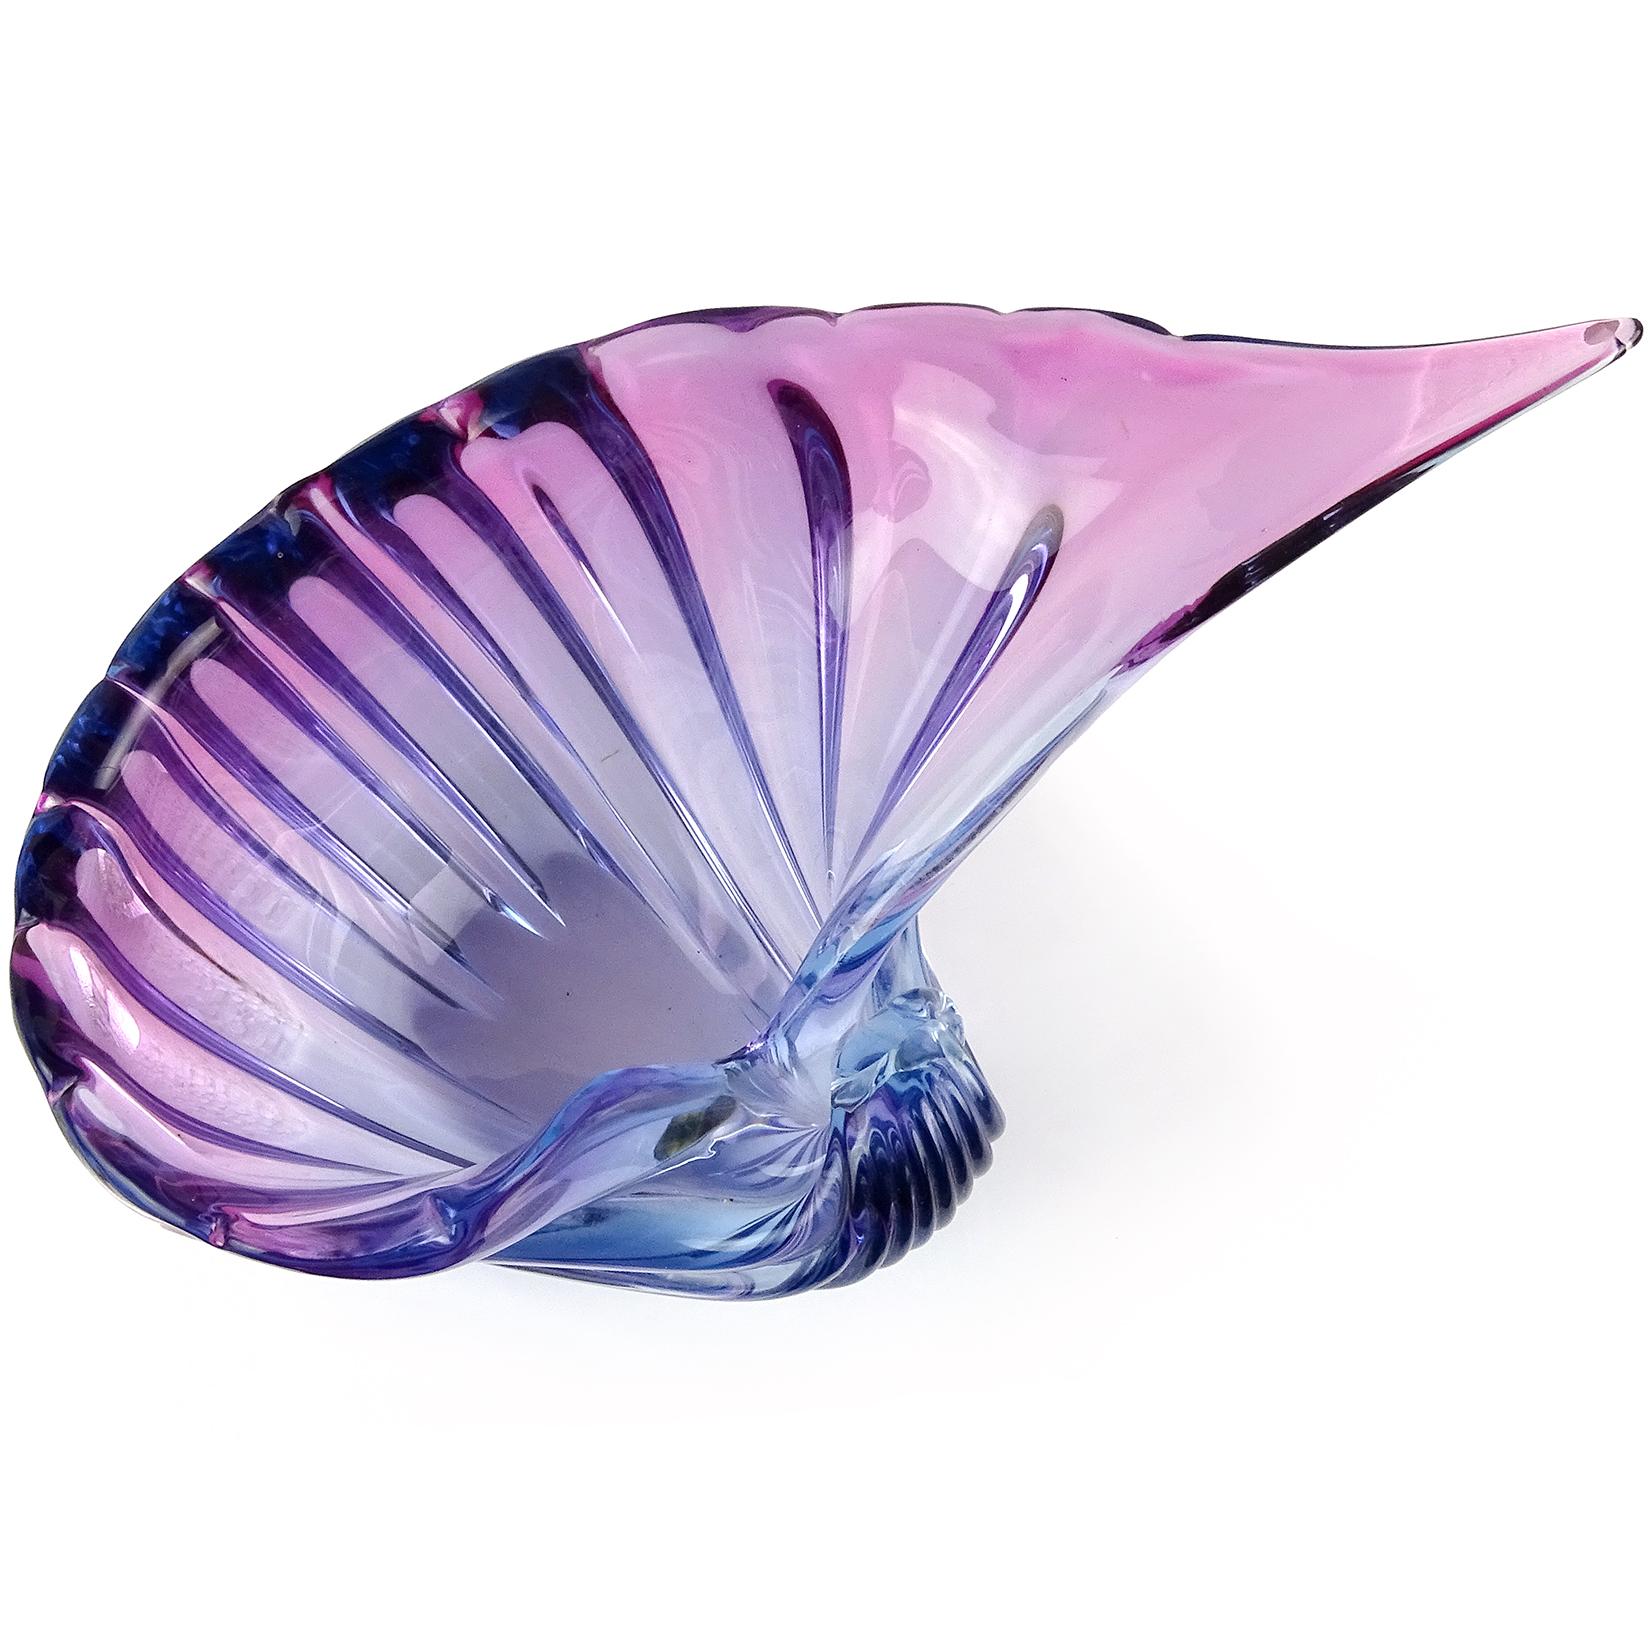 purple conch shell